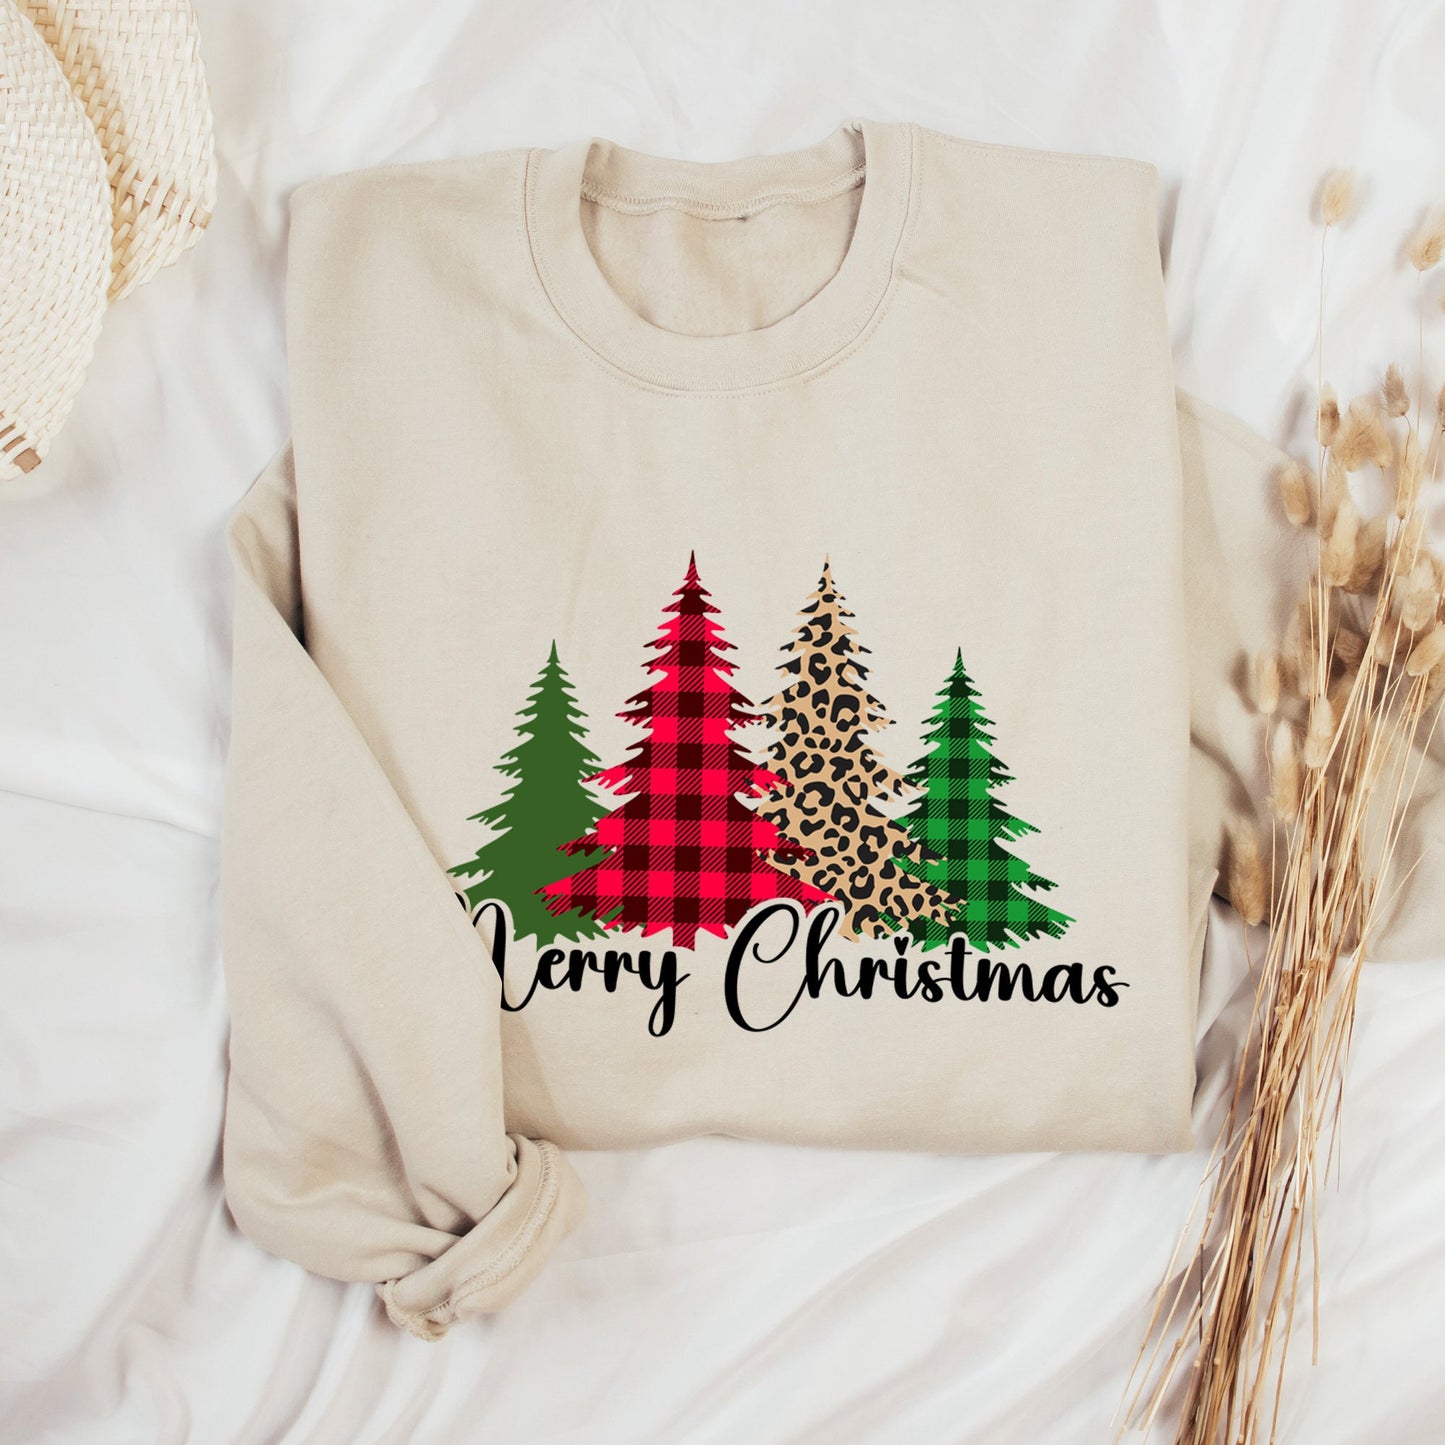 Merry Christmas Sweatshirt, Christmas Party Shirt, Cute Women's Holiday Shirt, Women's Christmas top, Holiday T-Shirt